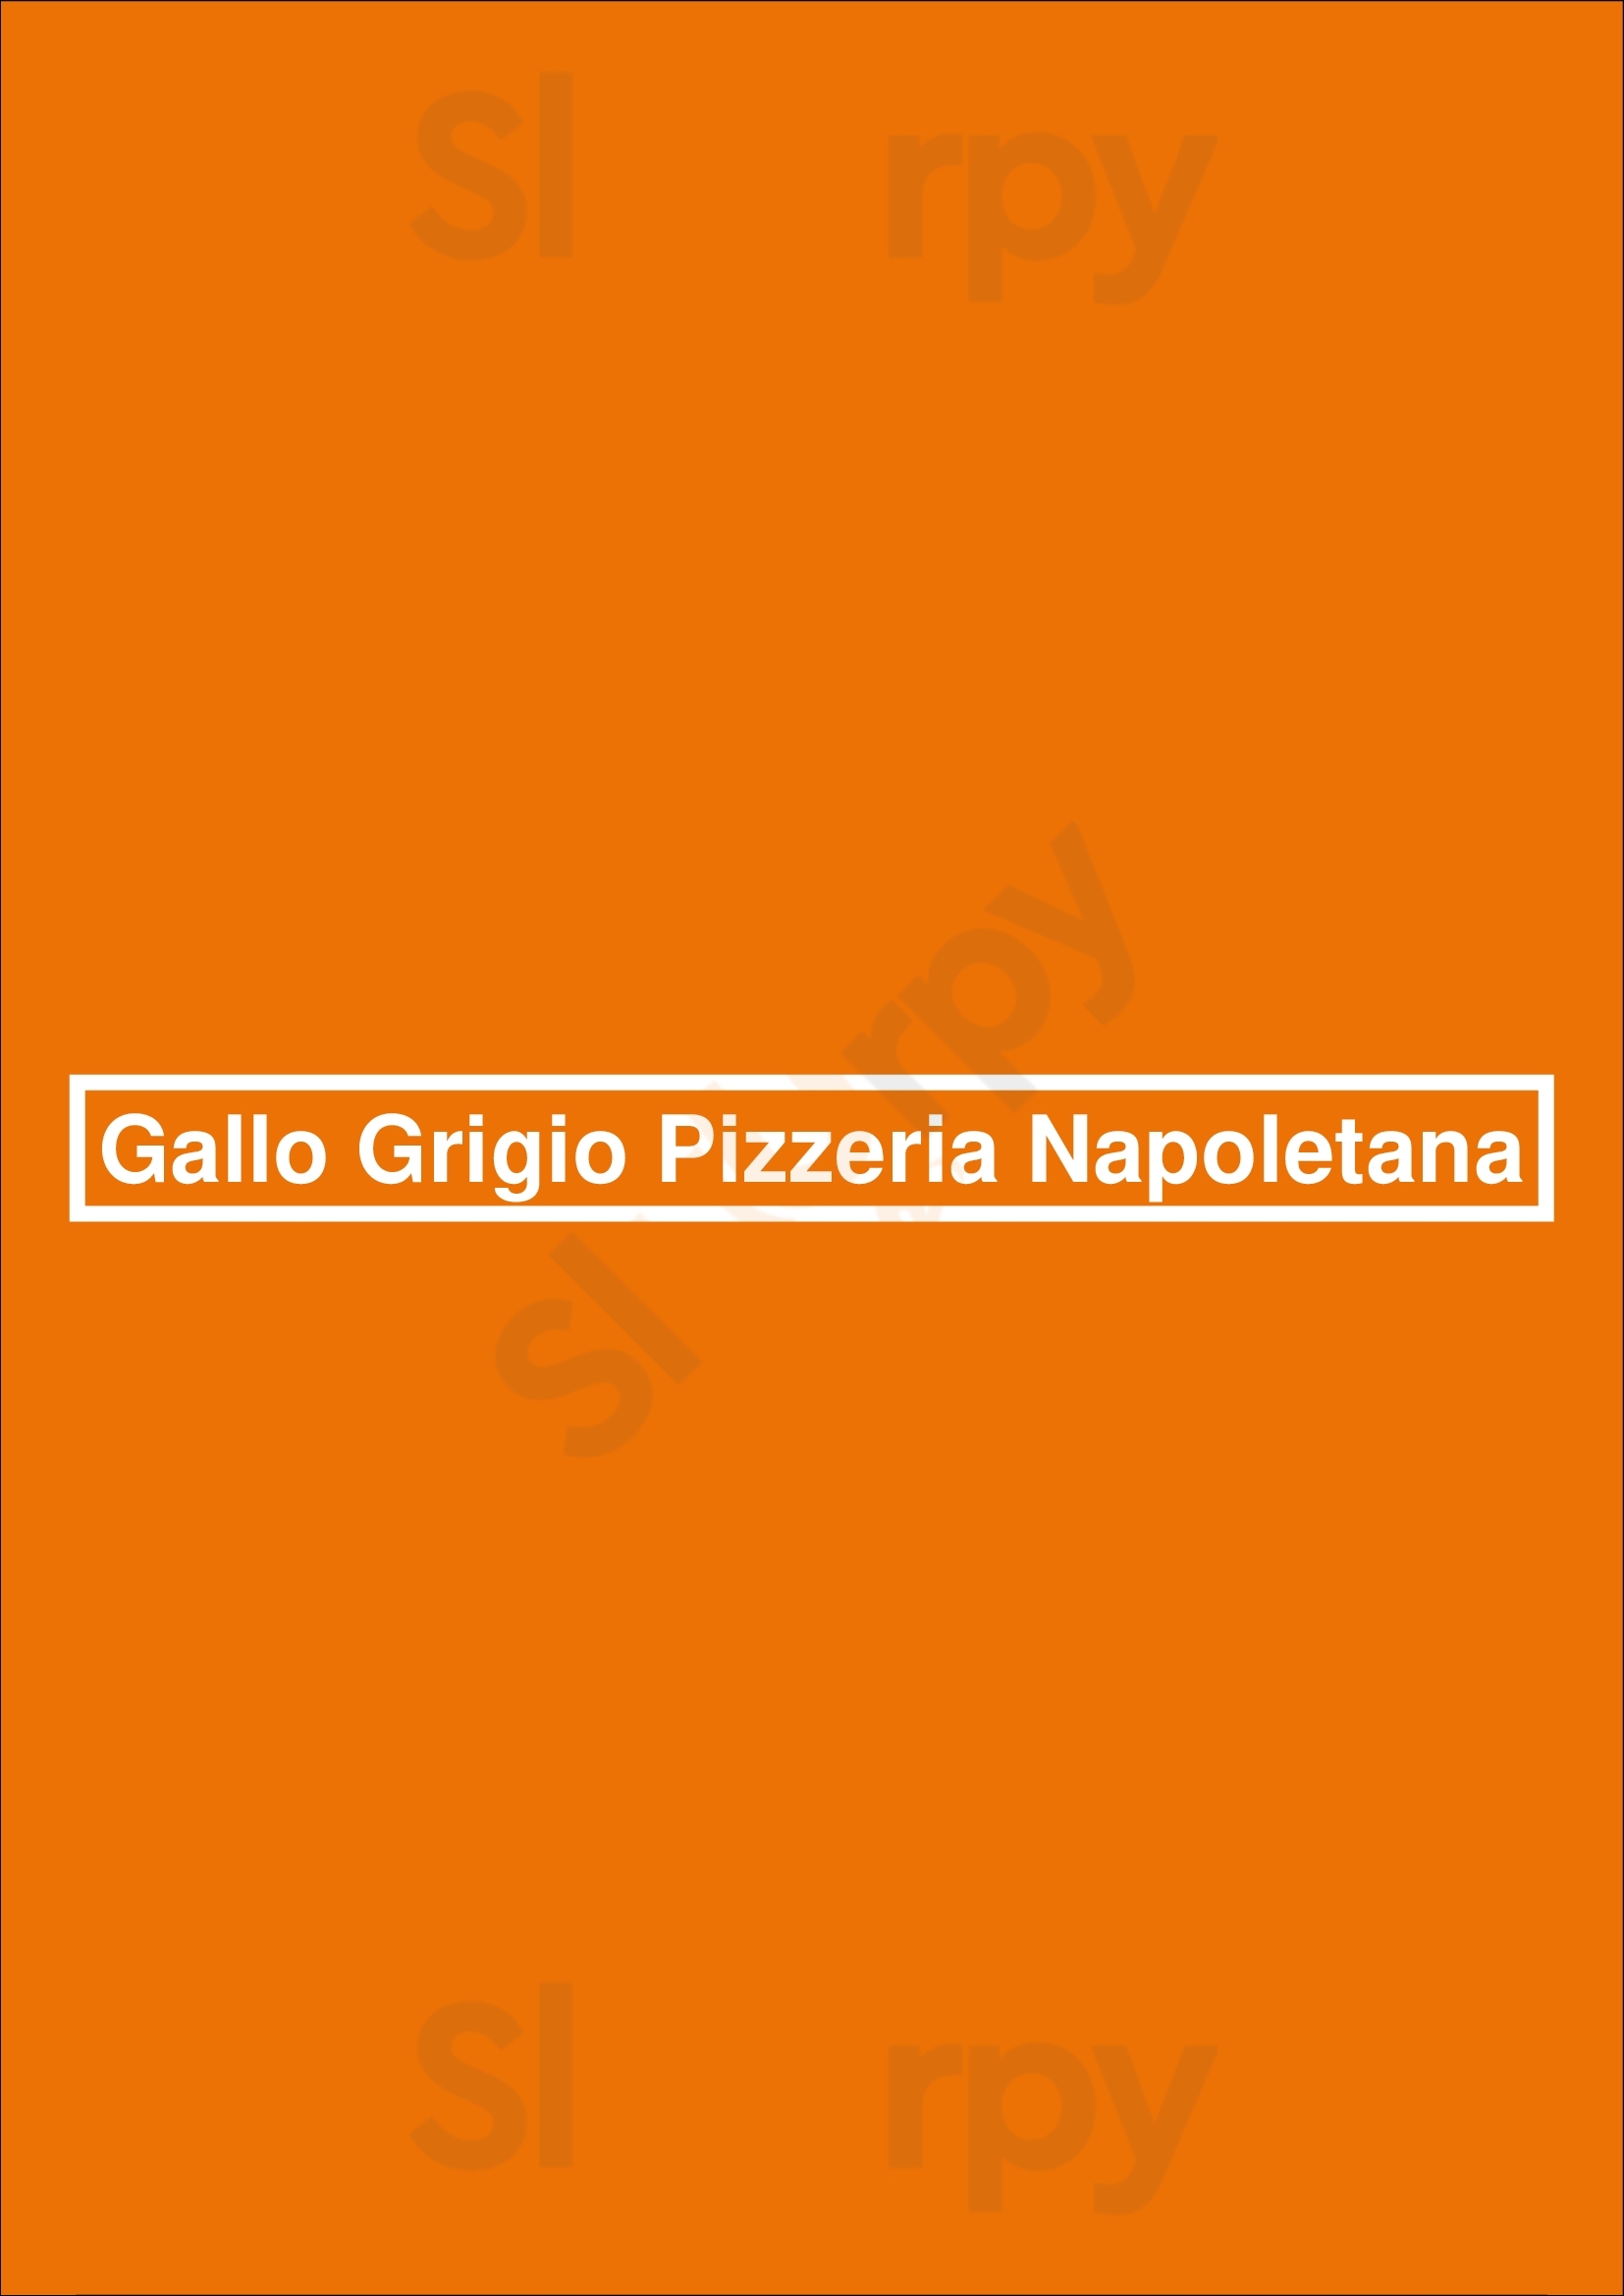 Gallo Grigio Pizzeria Vila Nova de Gaia Menu - 1